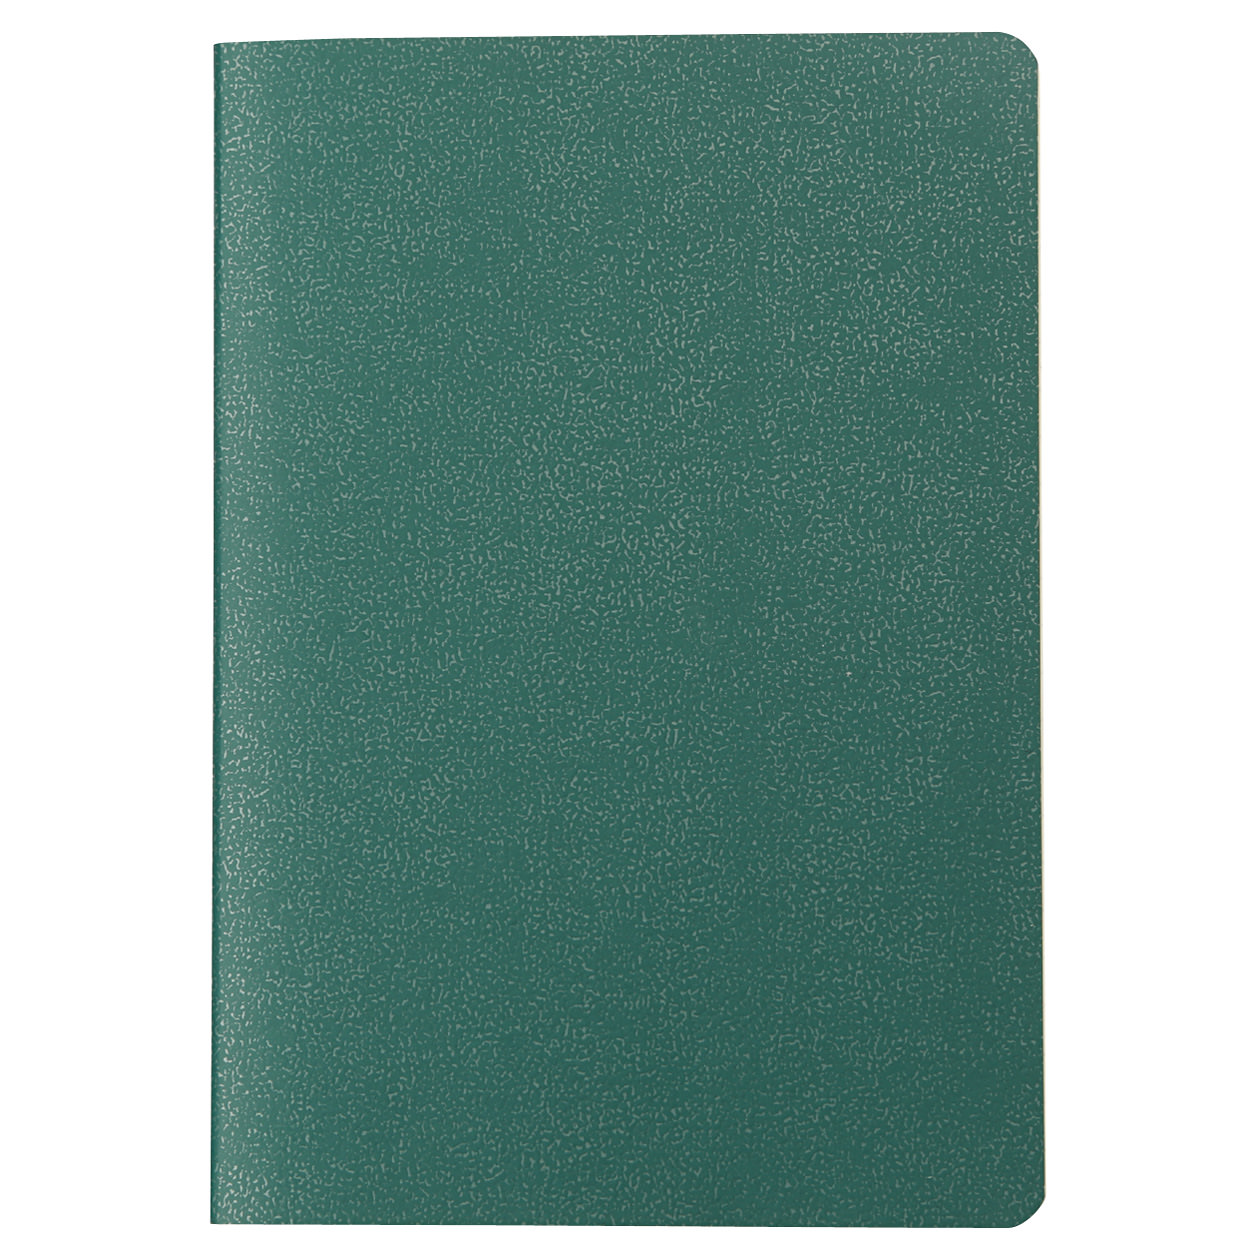 Passport Notebook - Green/Squared